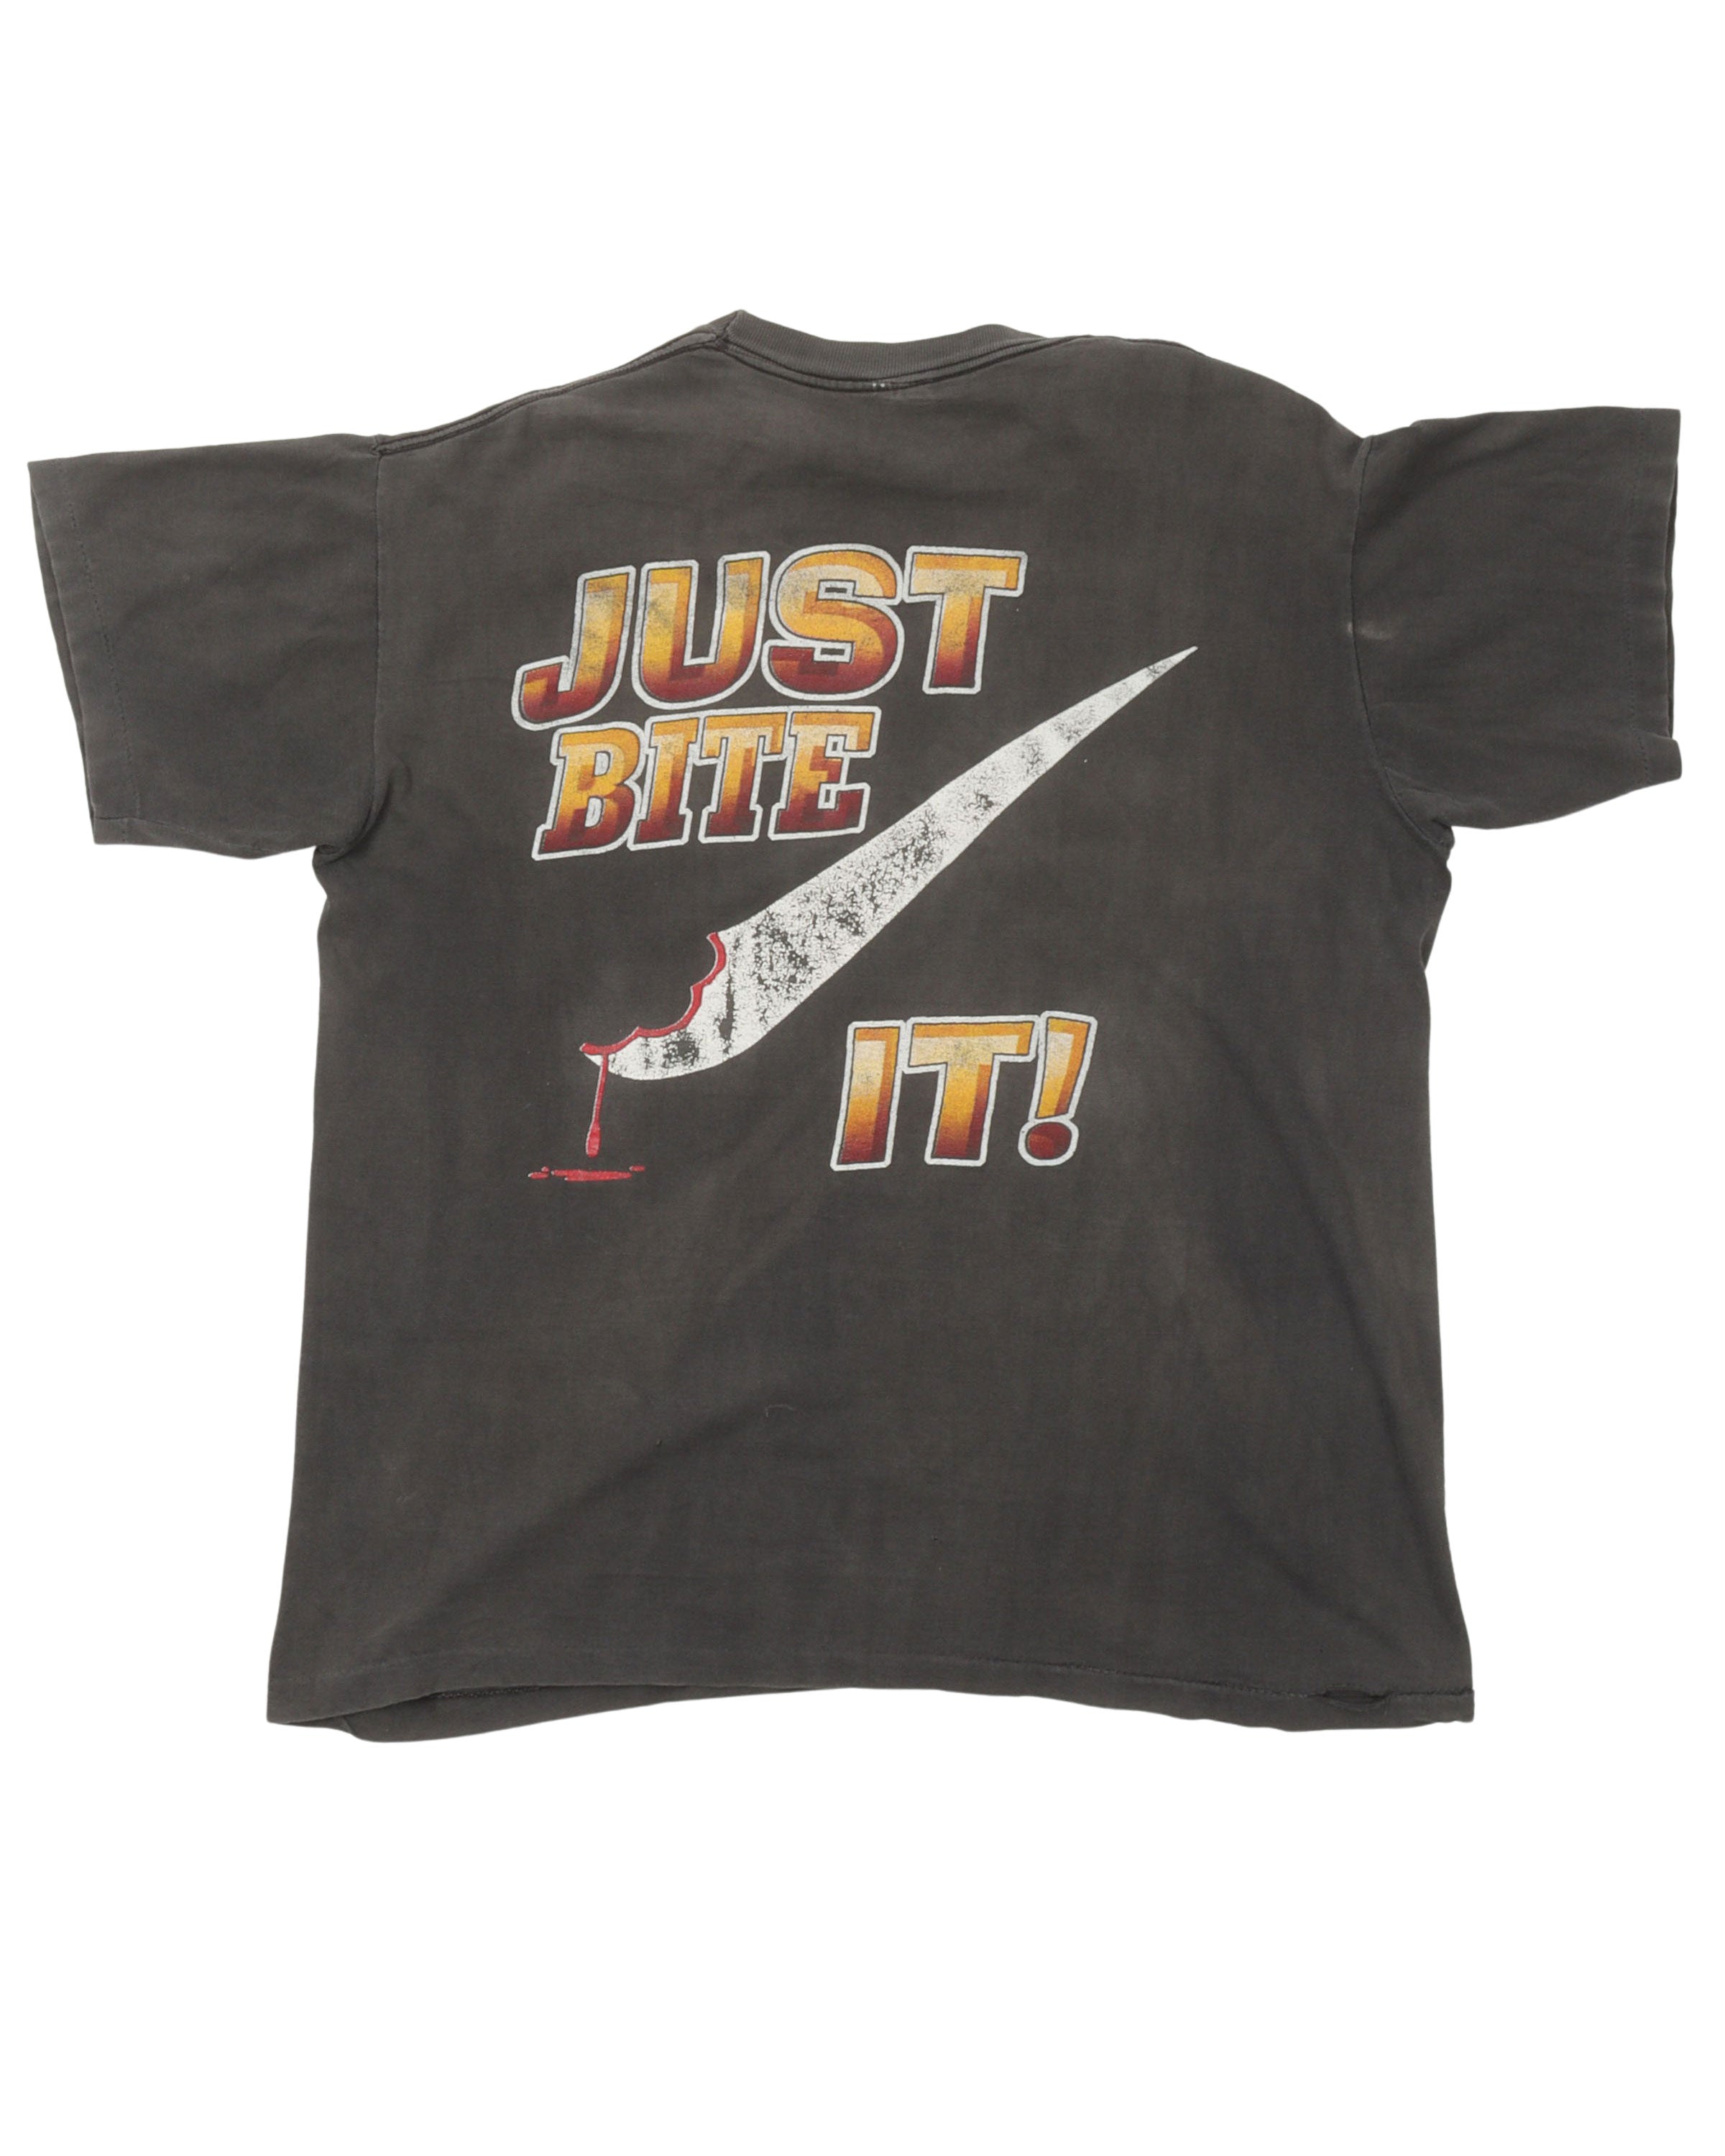 Mike Tyson "Iron Bite Mike" T-Shirt